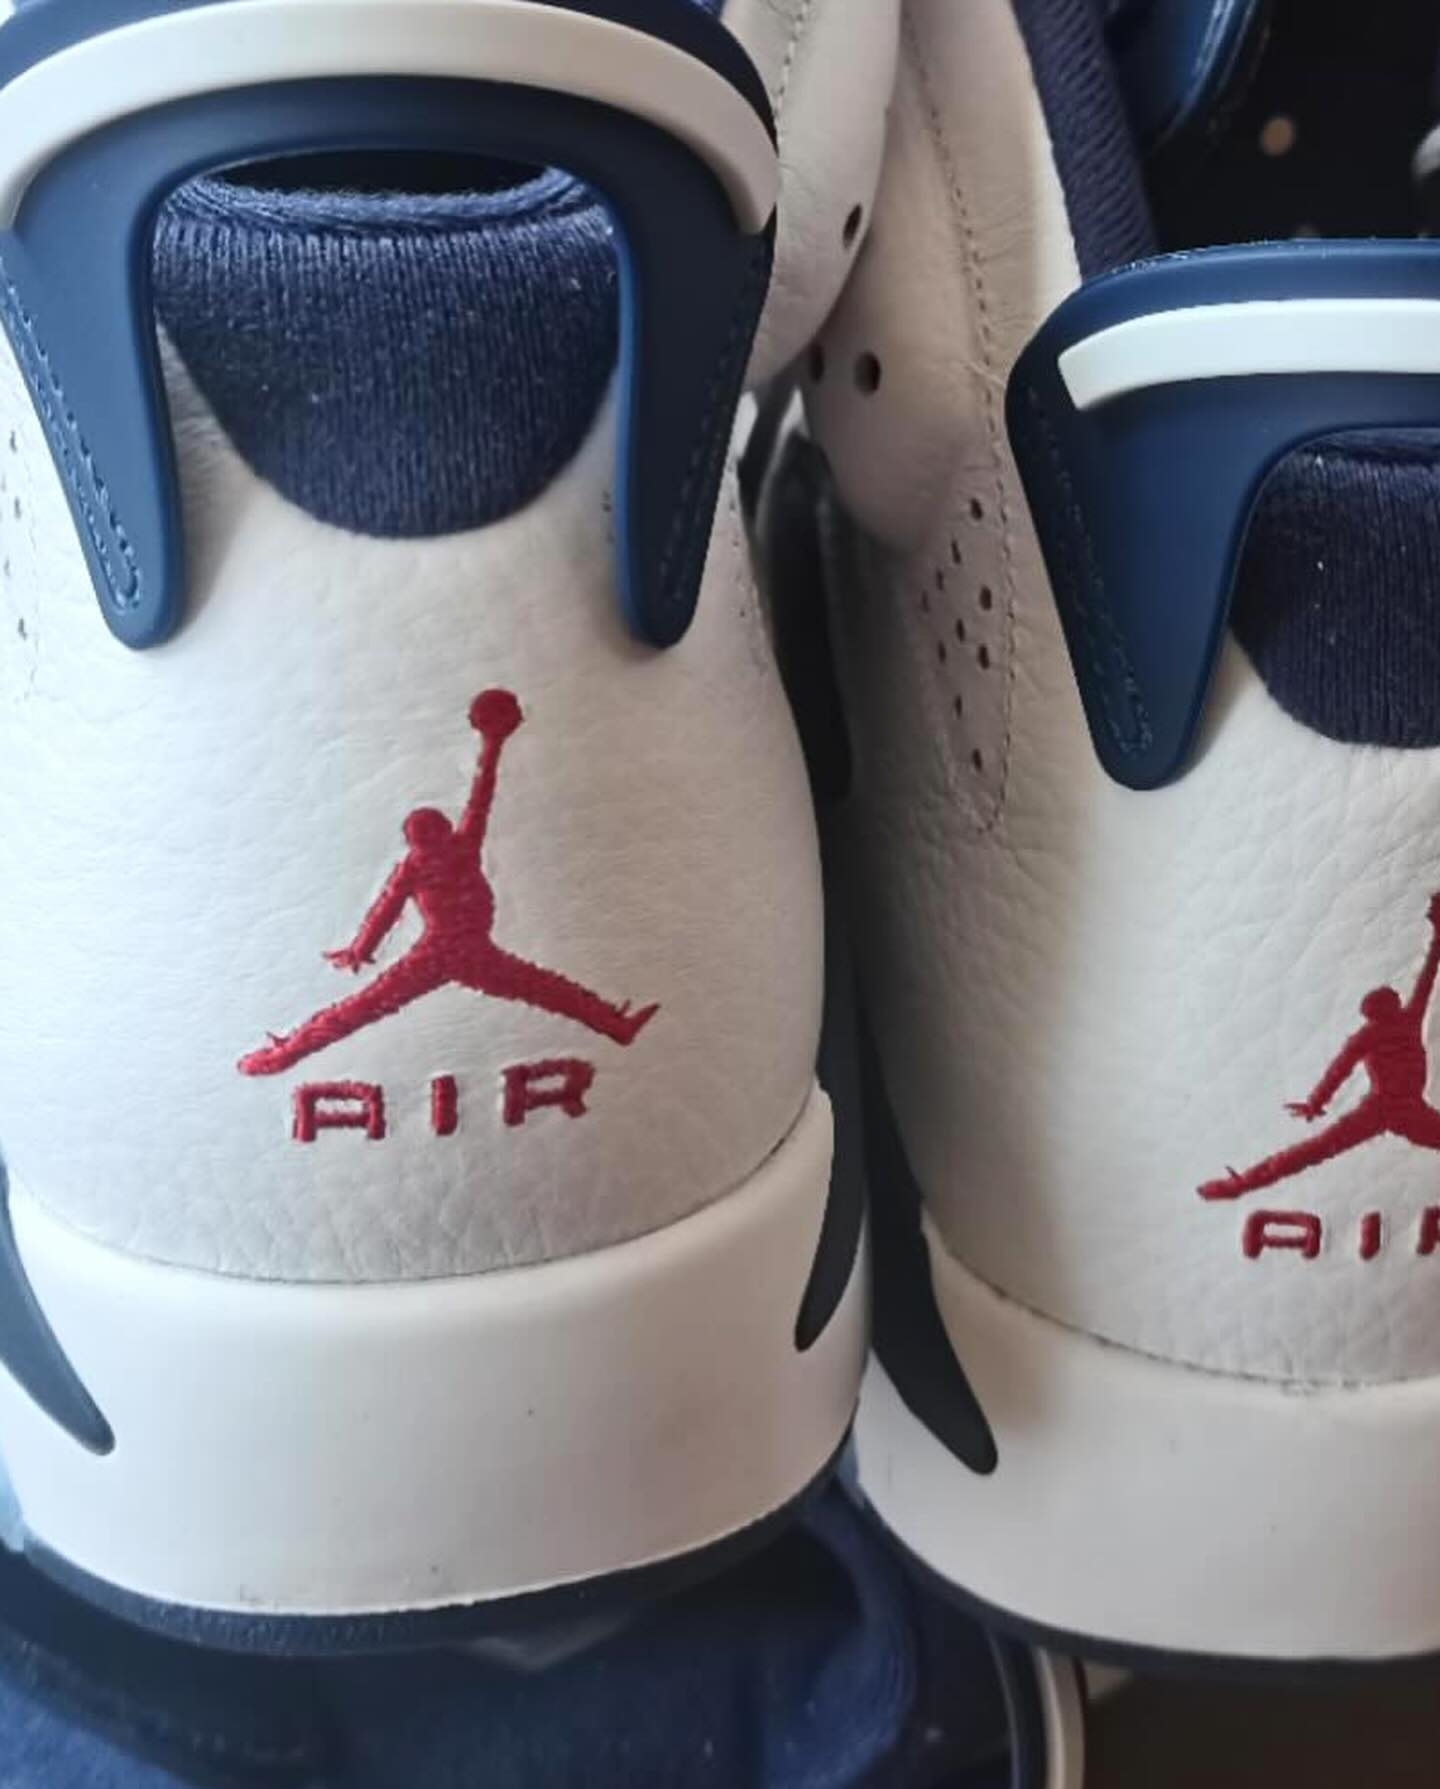 Close-up of Air Jordan sneakers showing the iconic Jumpman logo